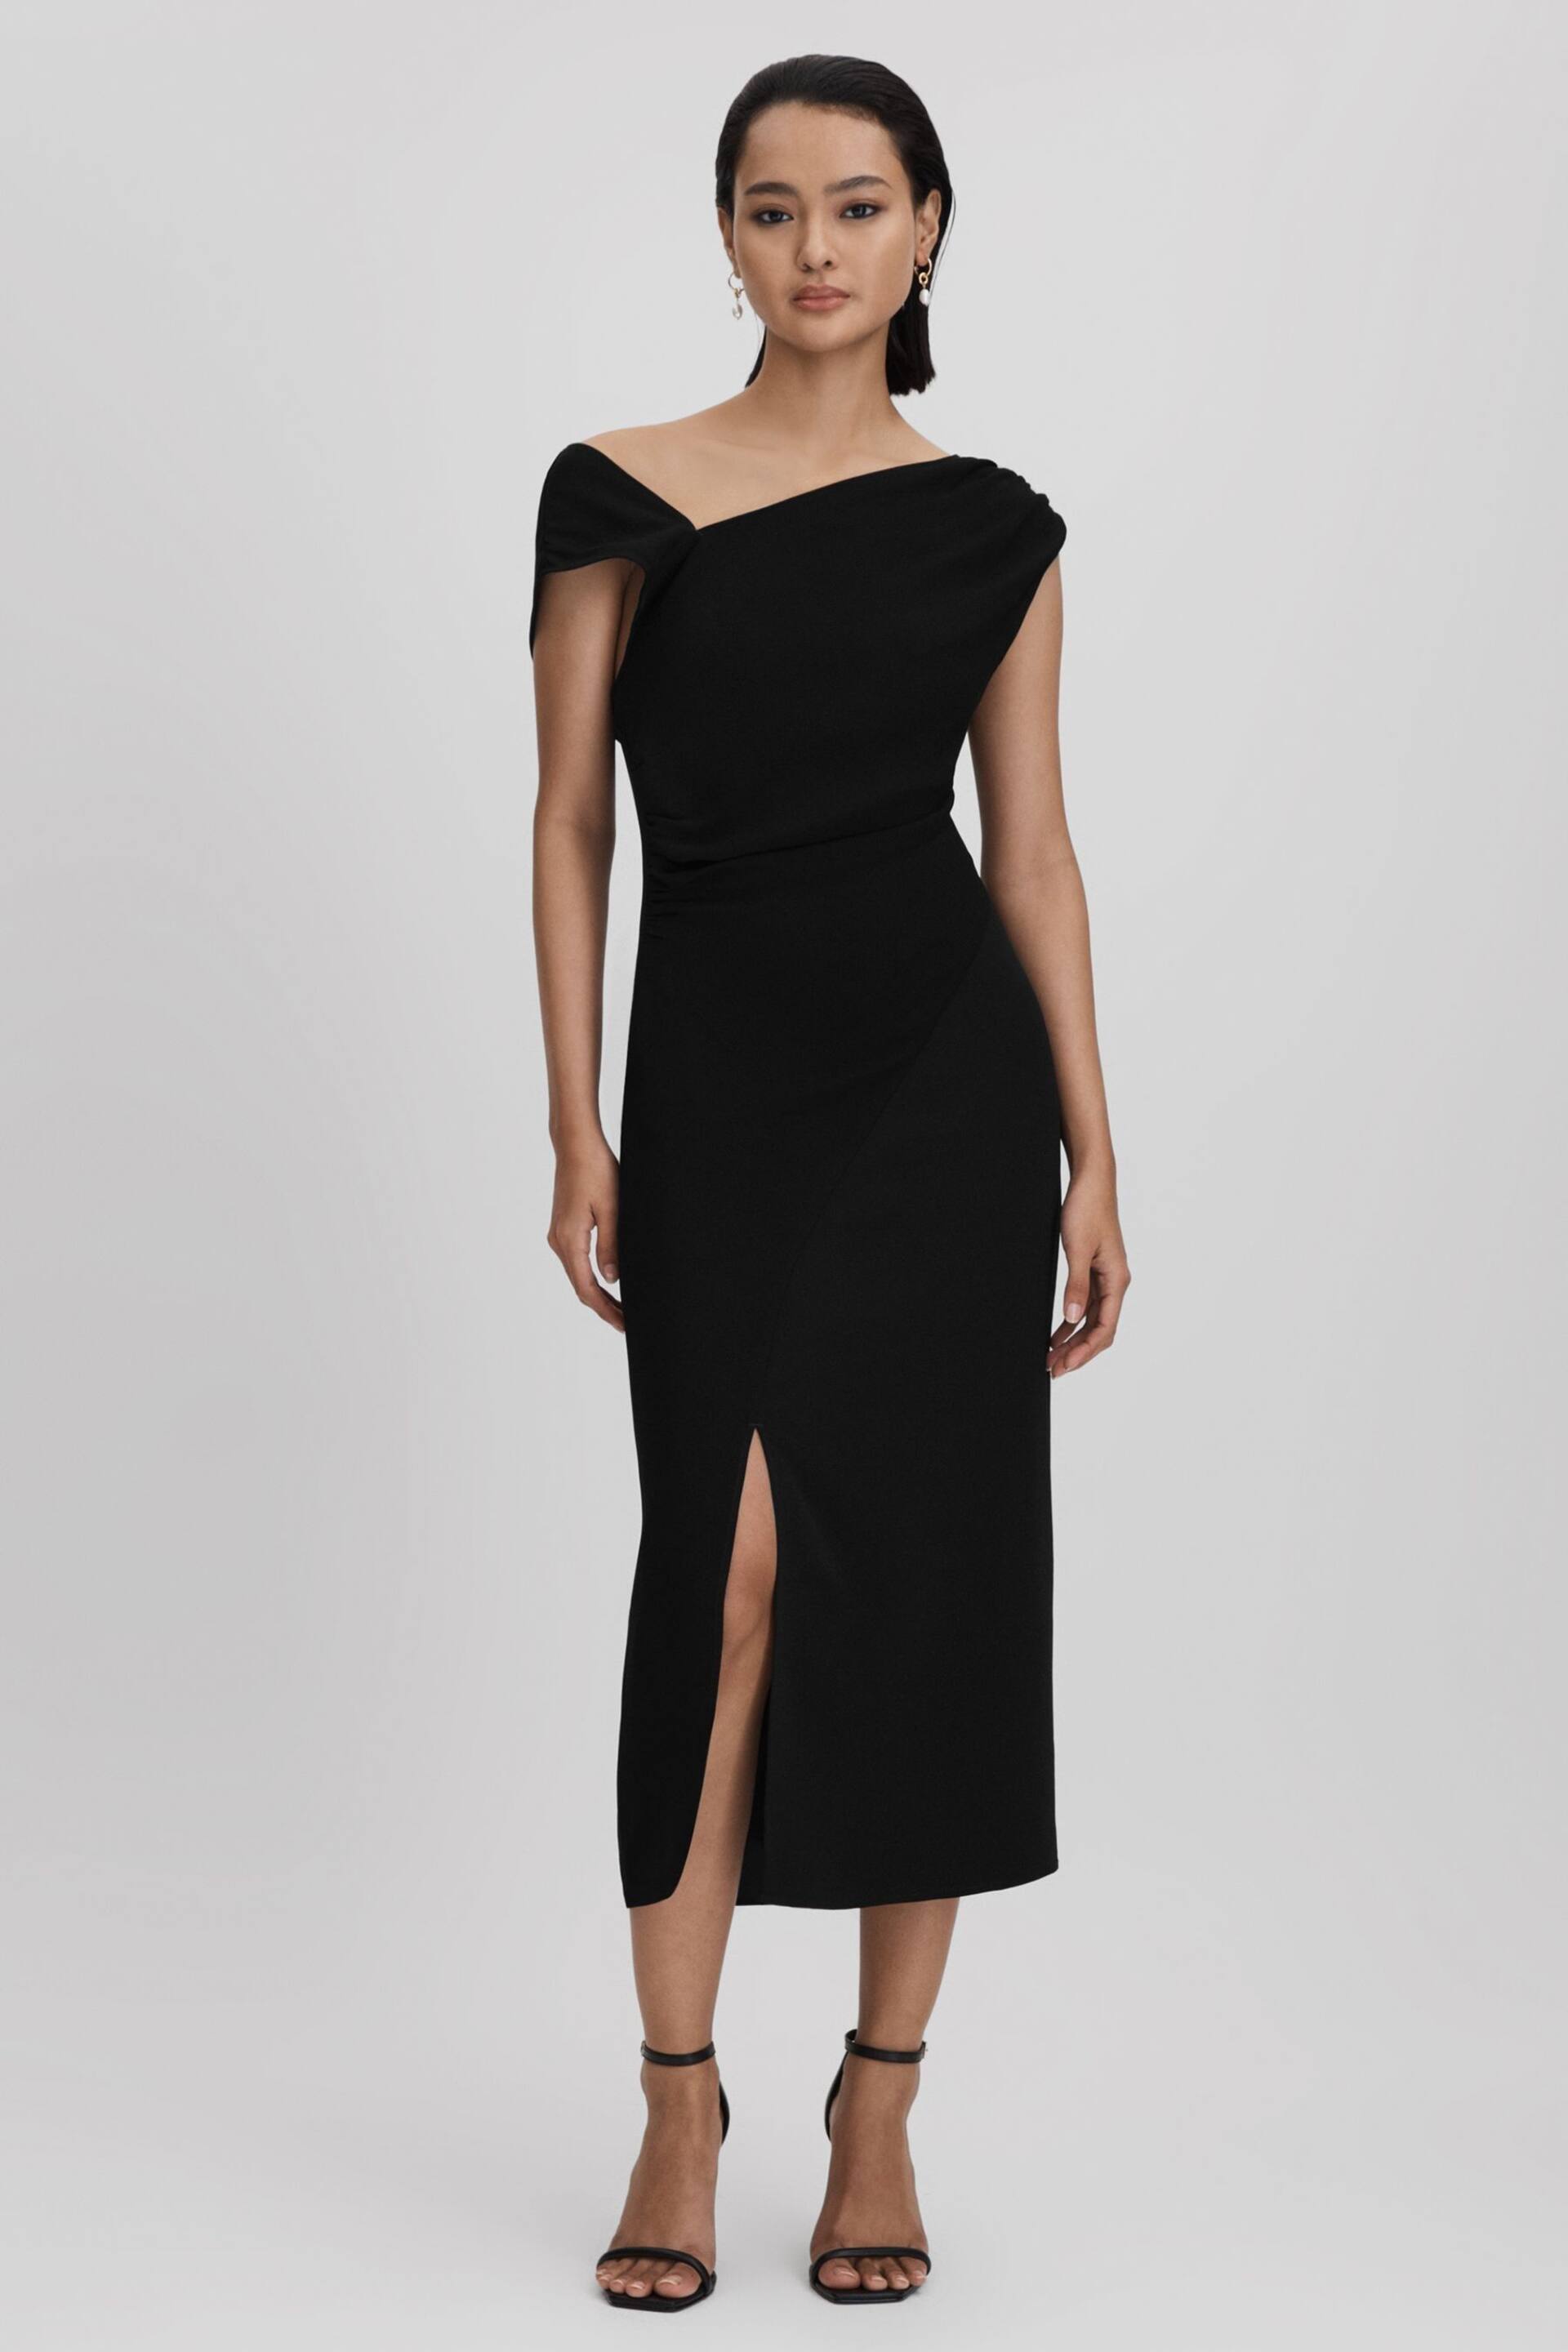 Reiss Black Miller Asymmetric Bodycon Midi Dress - Image 1 of 6